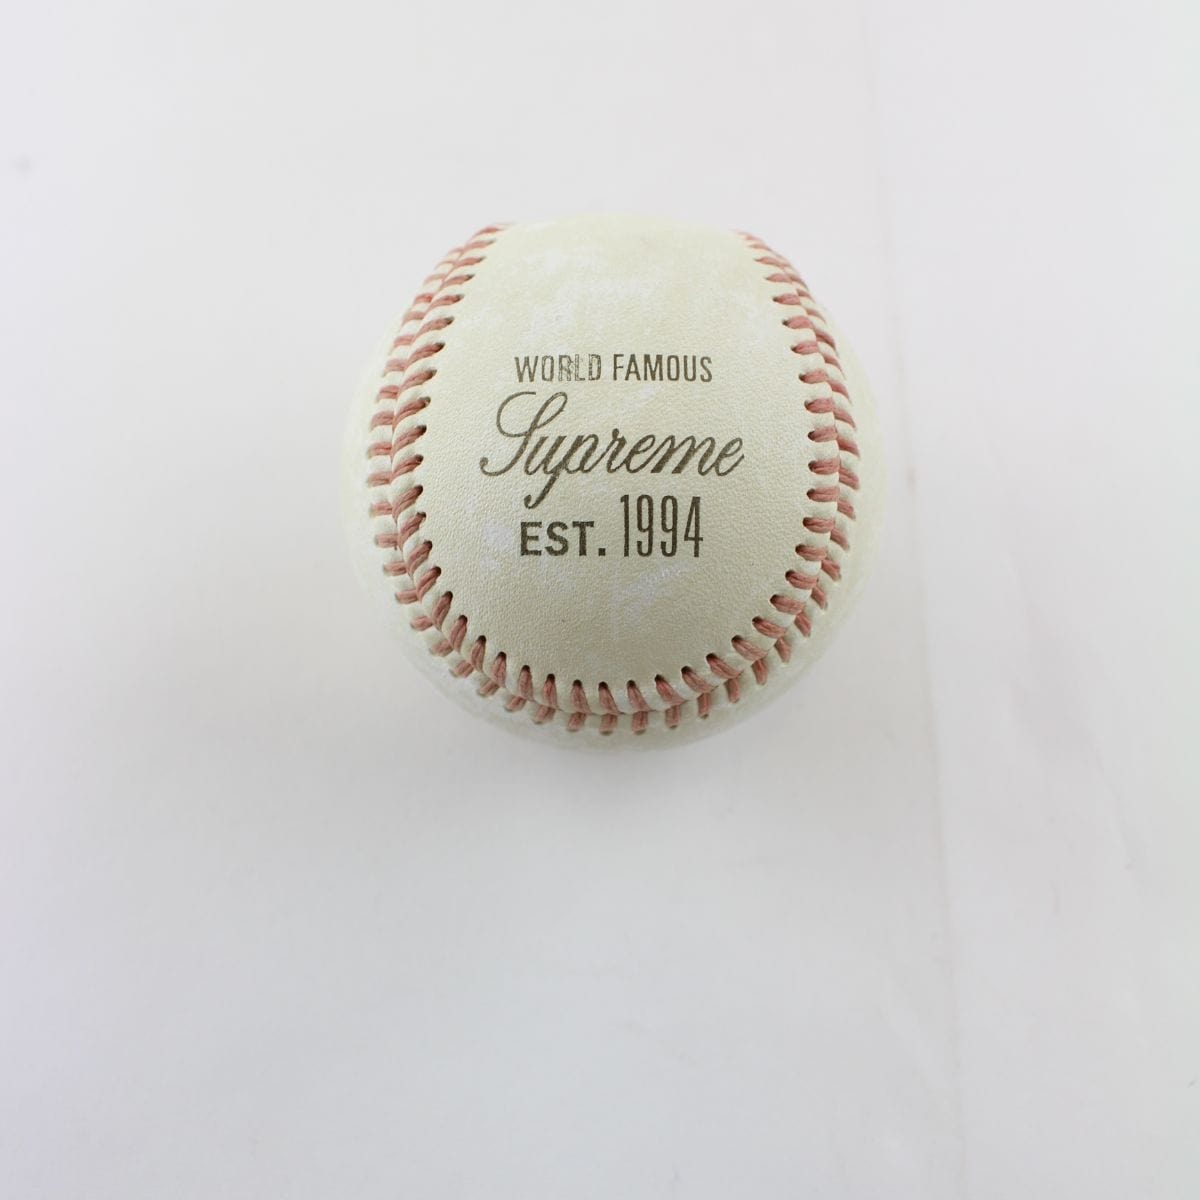 Supreme x Rawlings Baseball White - SaruGeneral